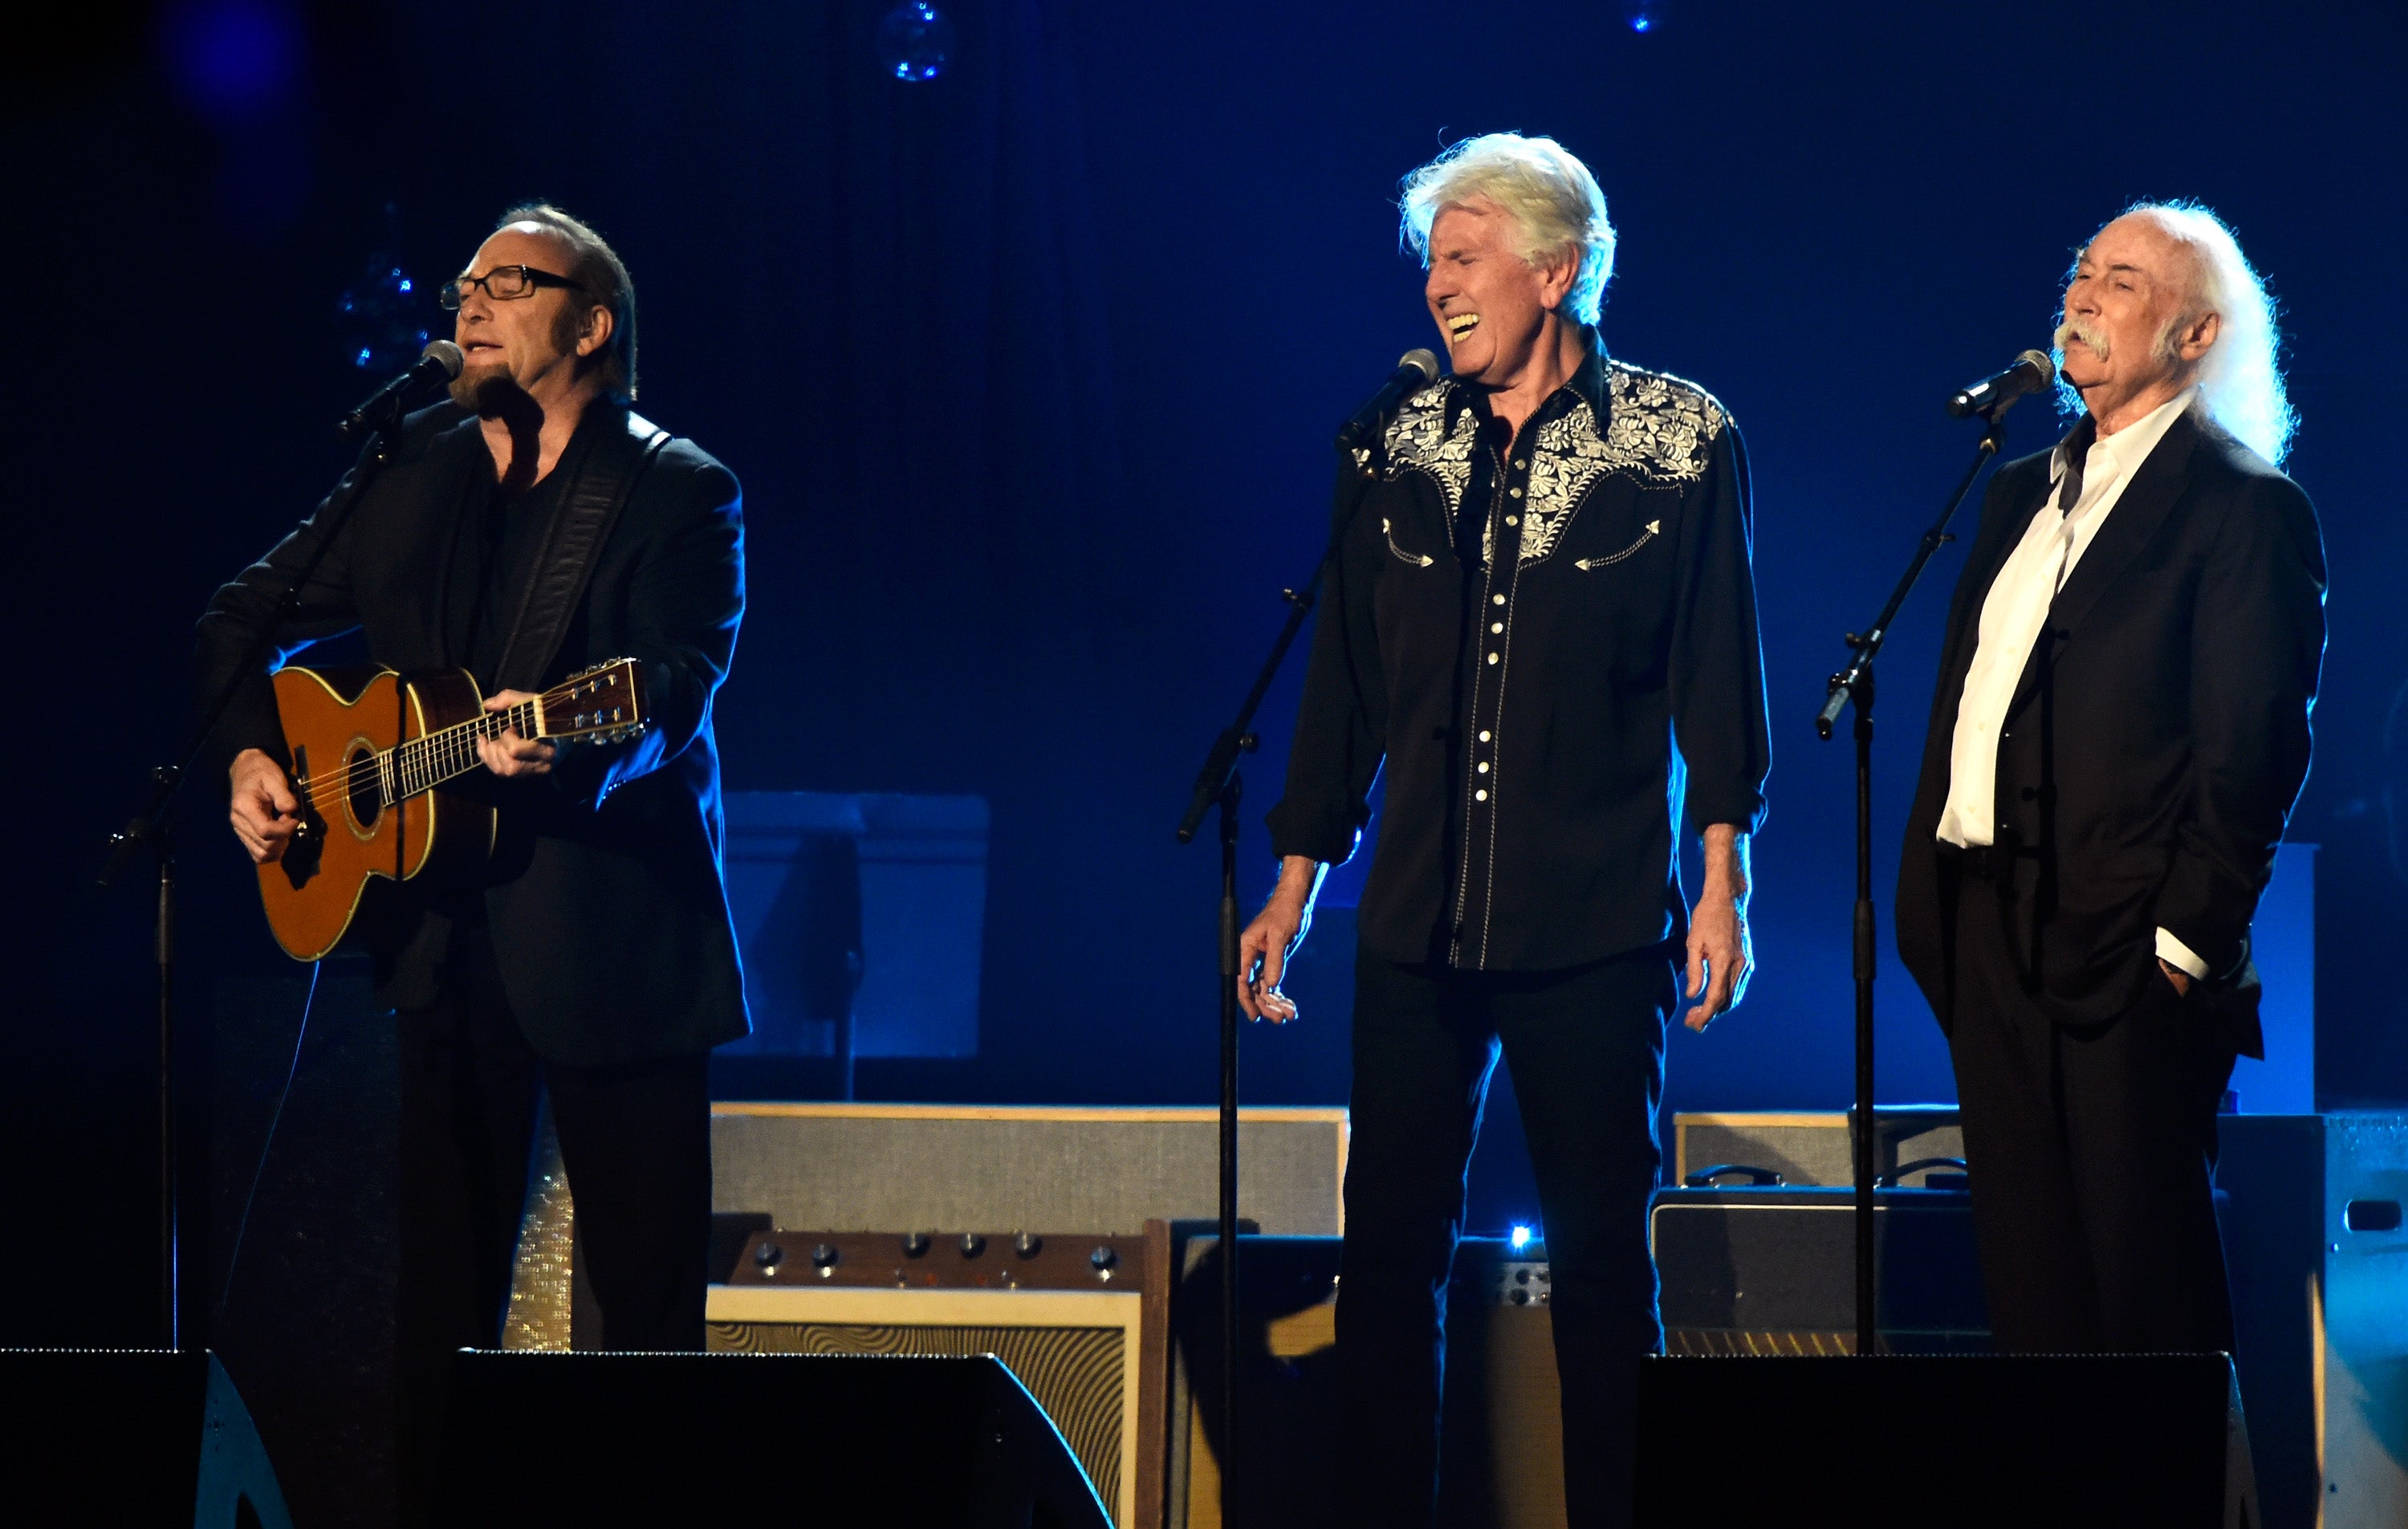 Stephen Stills, Graham Nash and David Crosby performing together in 2015